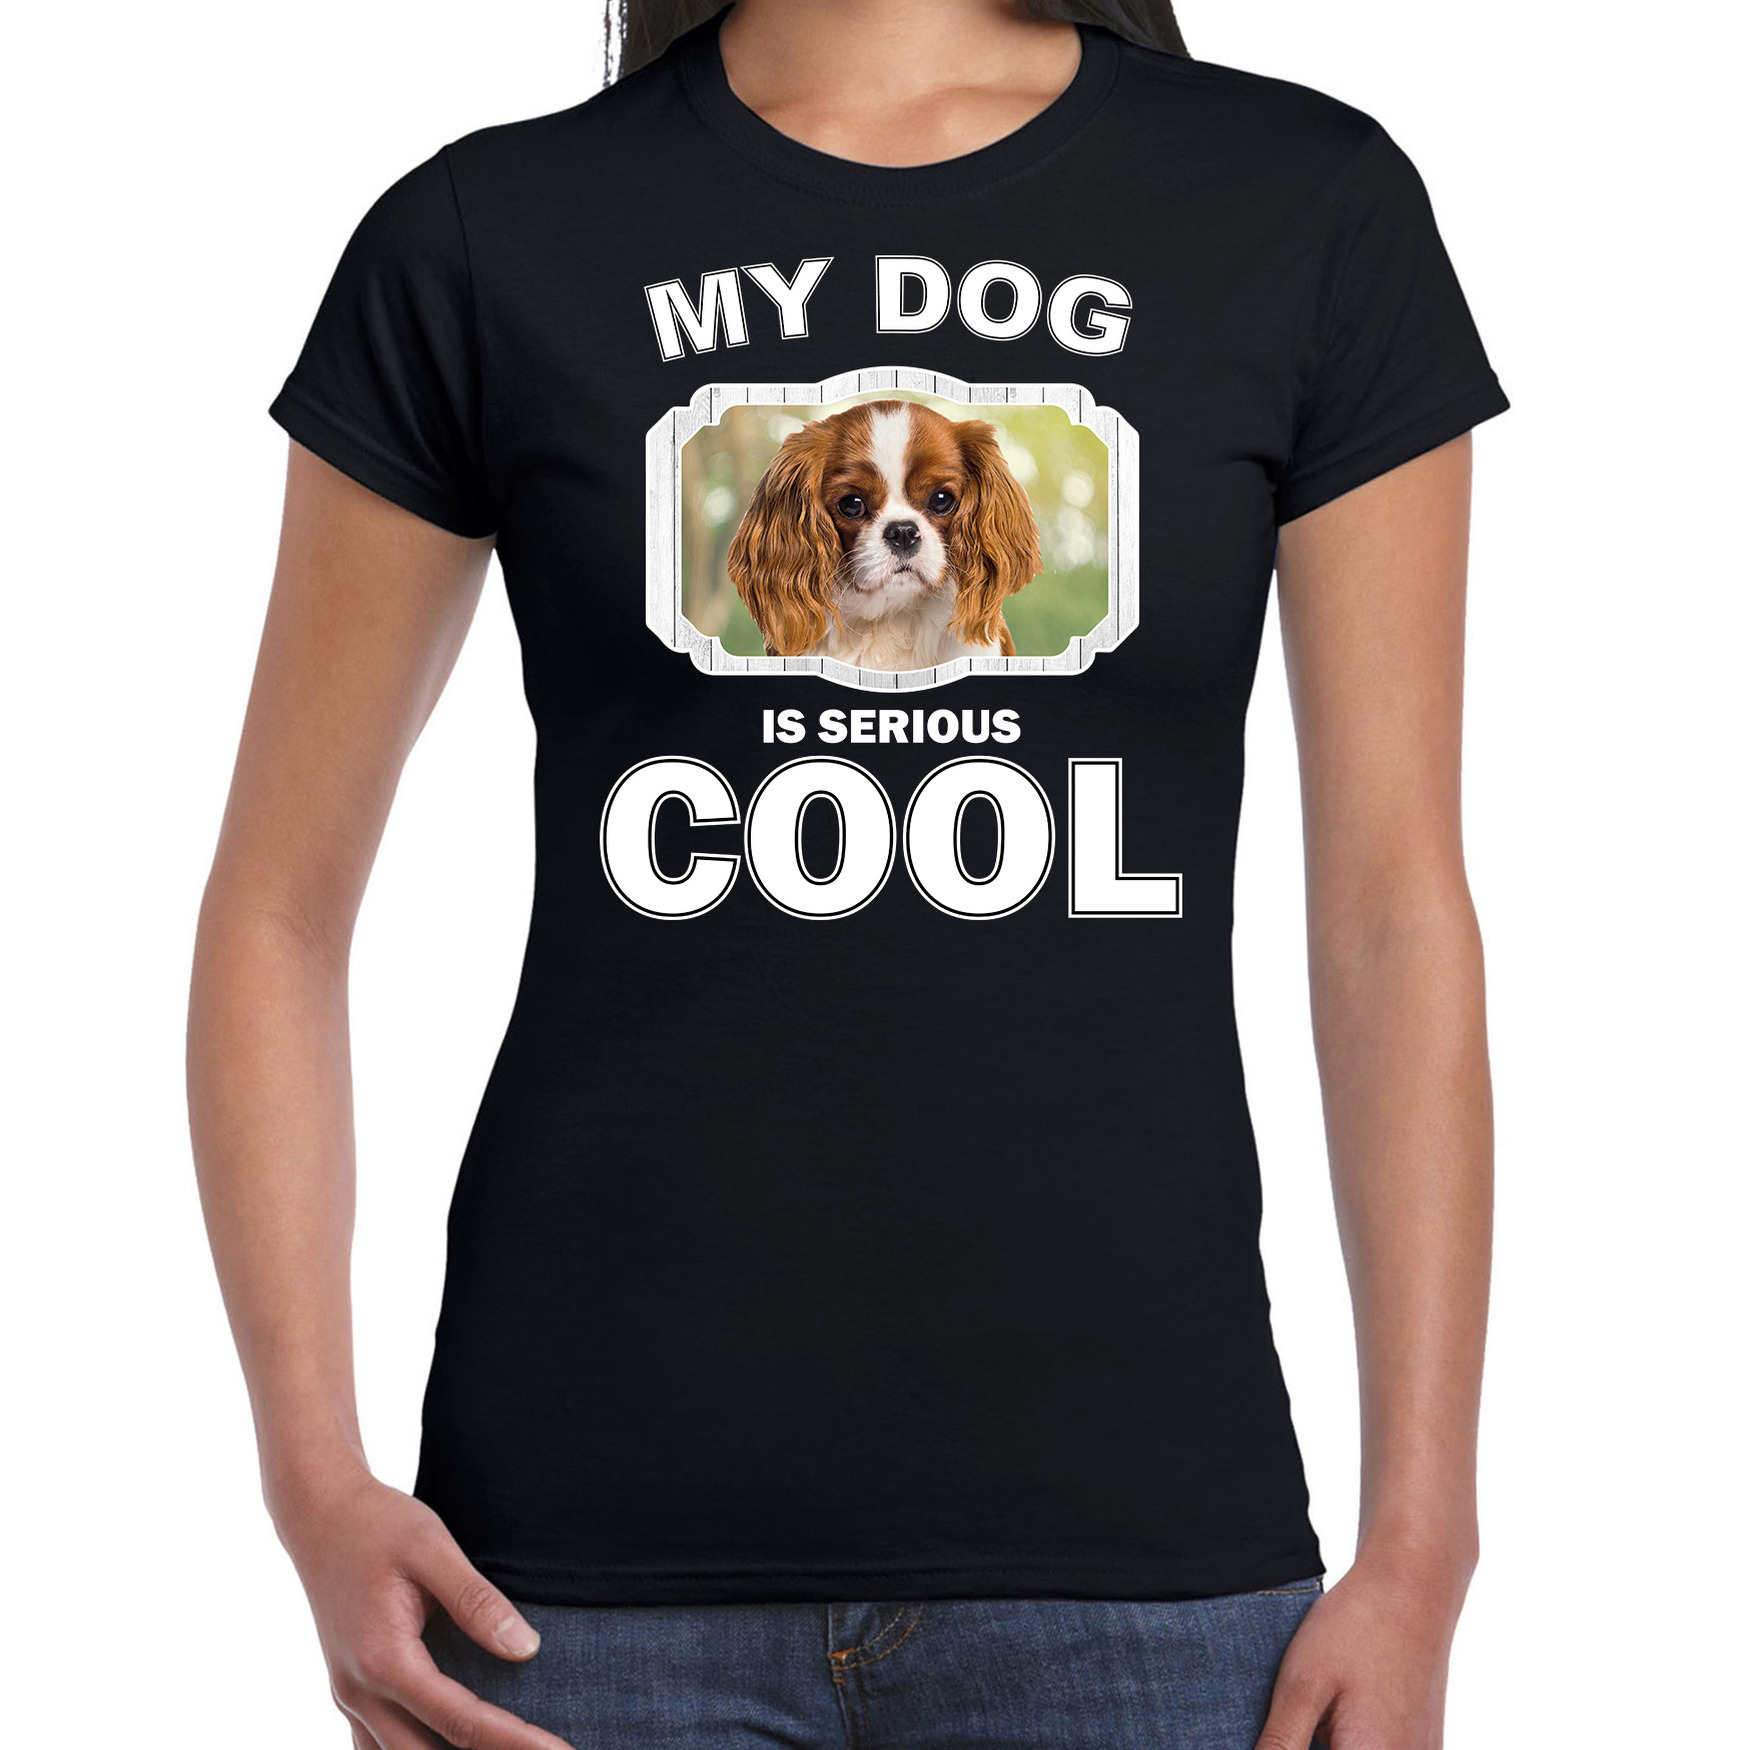 Charles spaniel honden t-shirt my dog is serious cool zwart voor dames